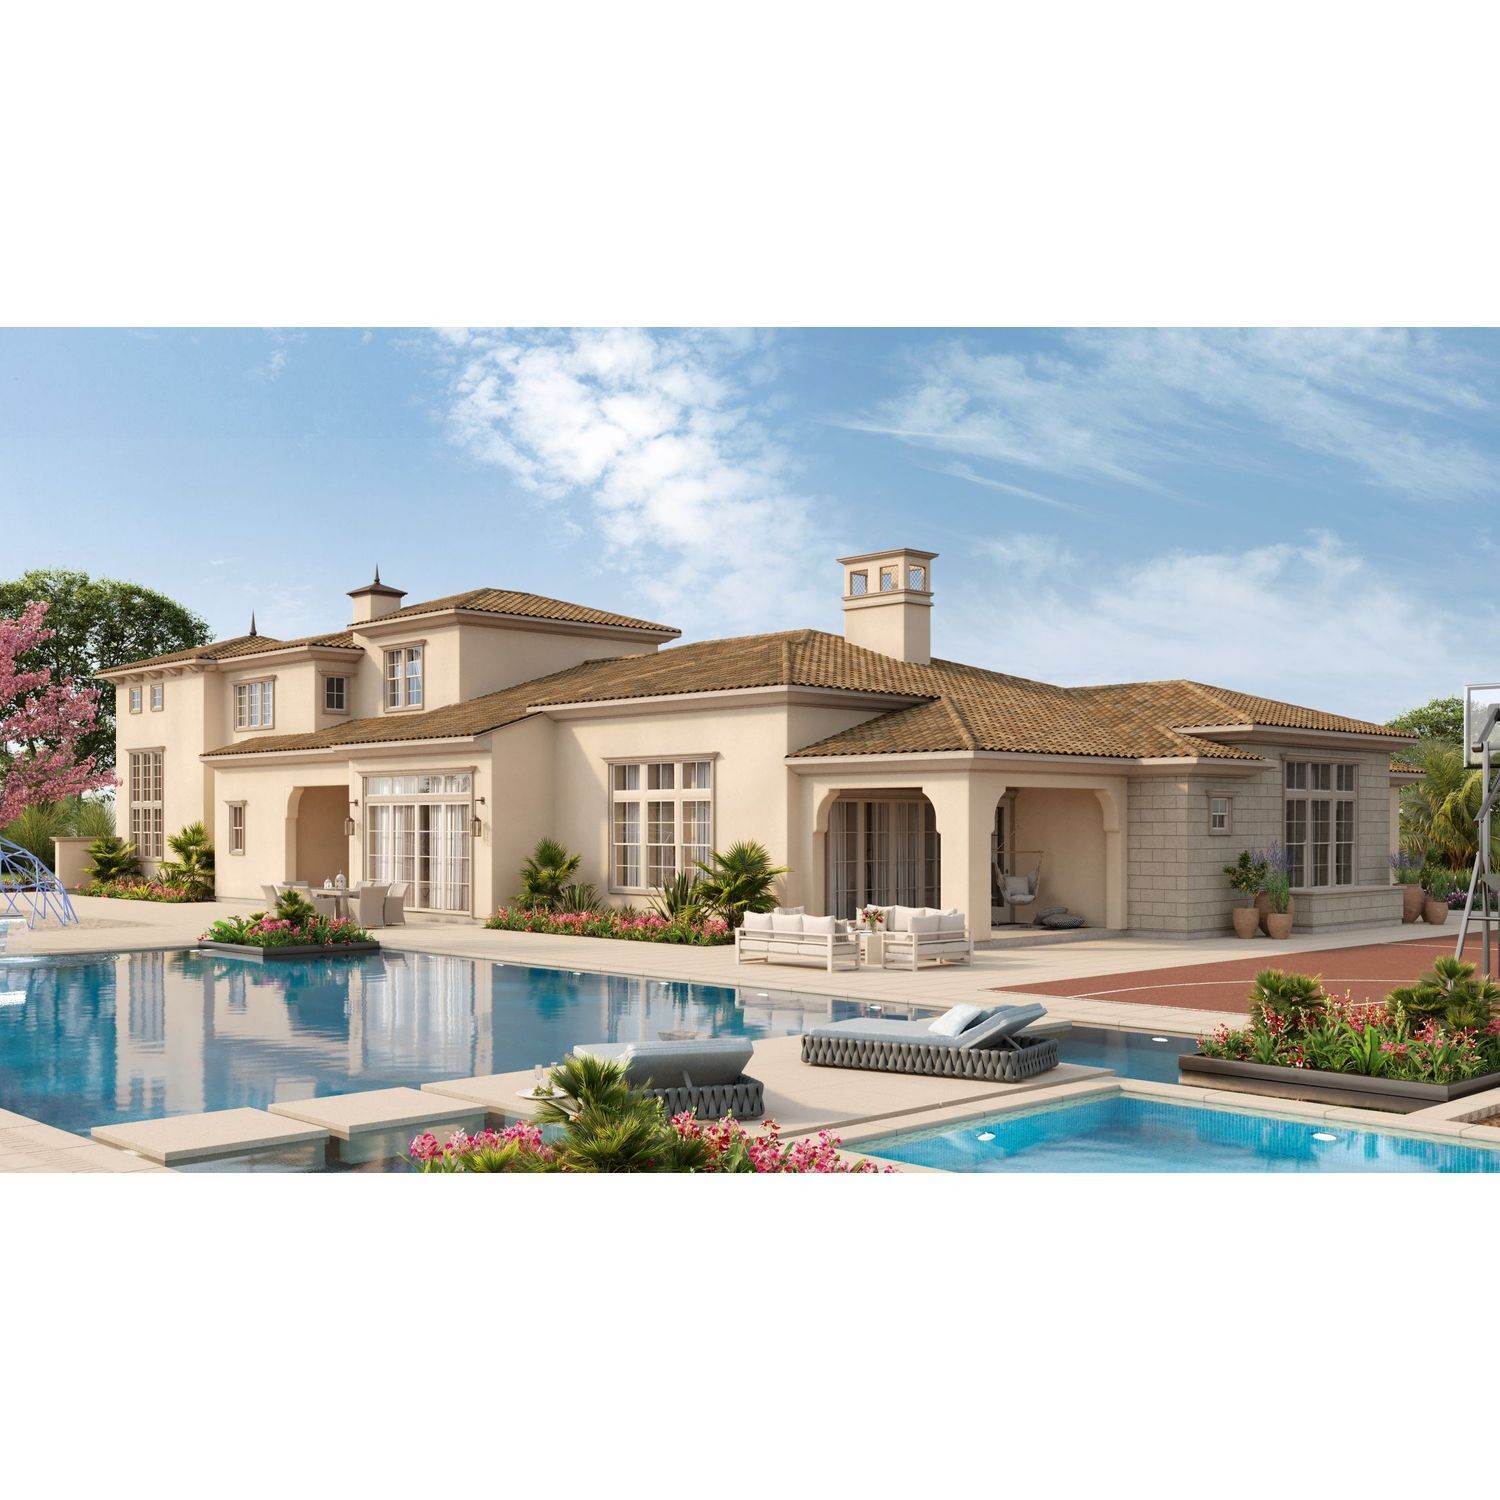 3. Single Family for Sale at Brasada Estates - Viana 1580 Brasada Lane SAN DIMAS, CALIFORNIA 91773 UNITED STATES